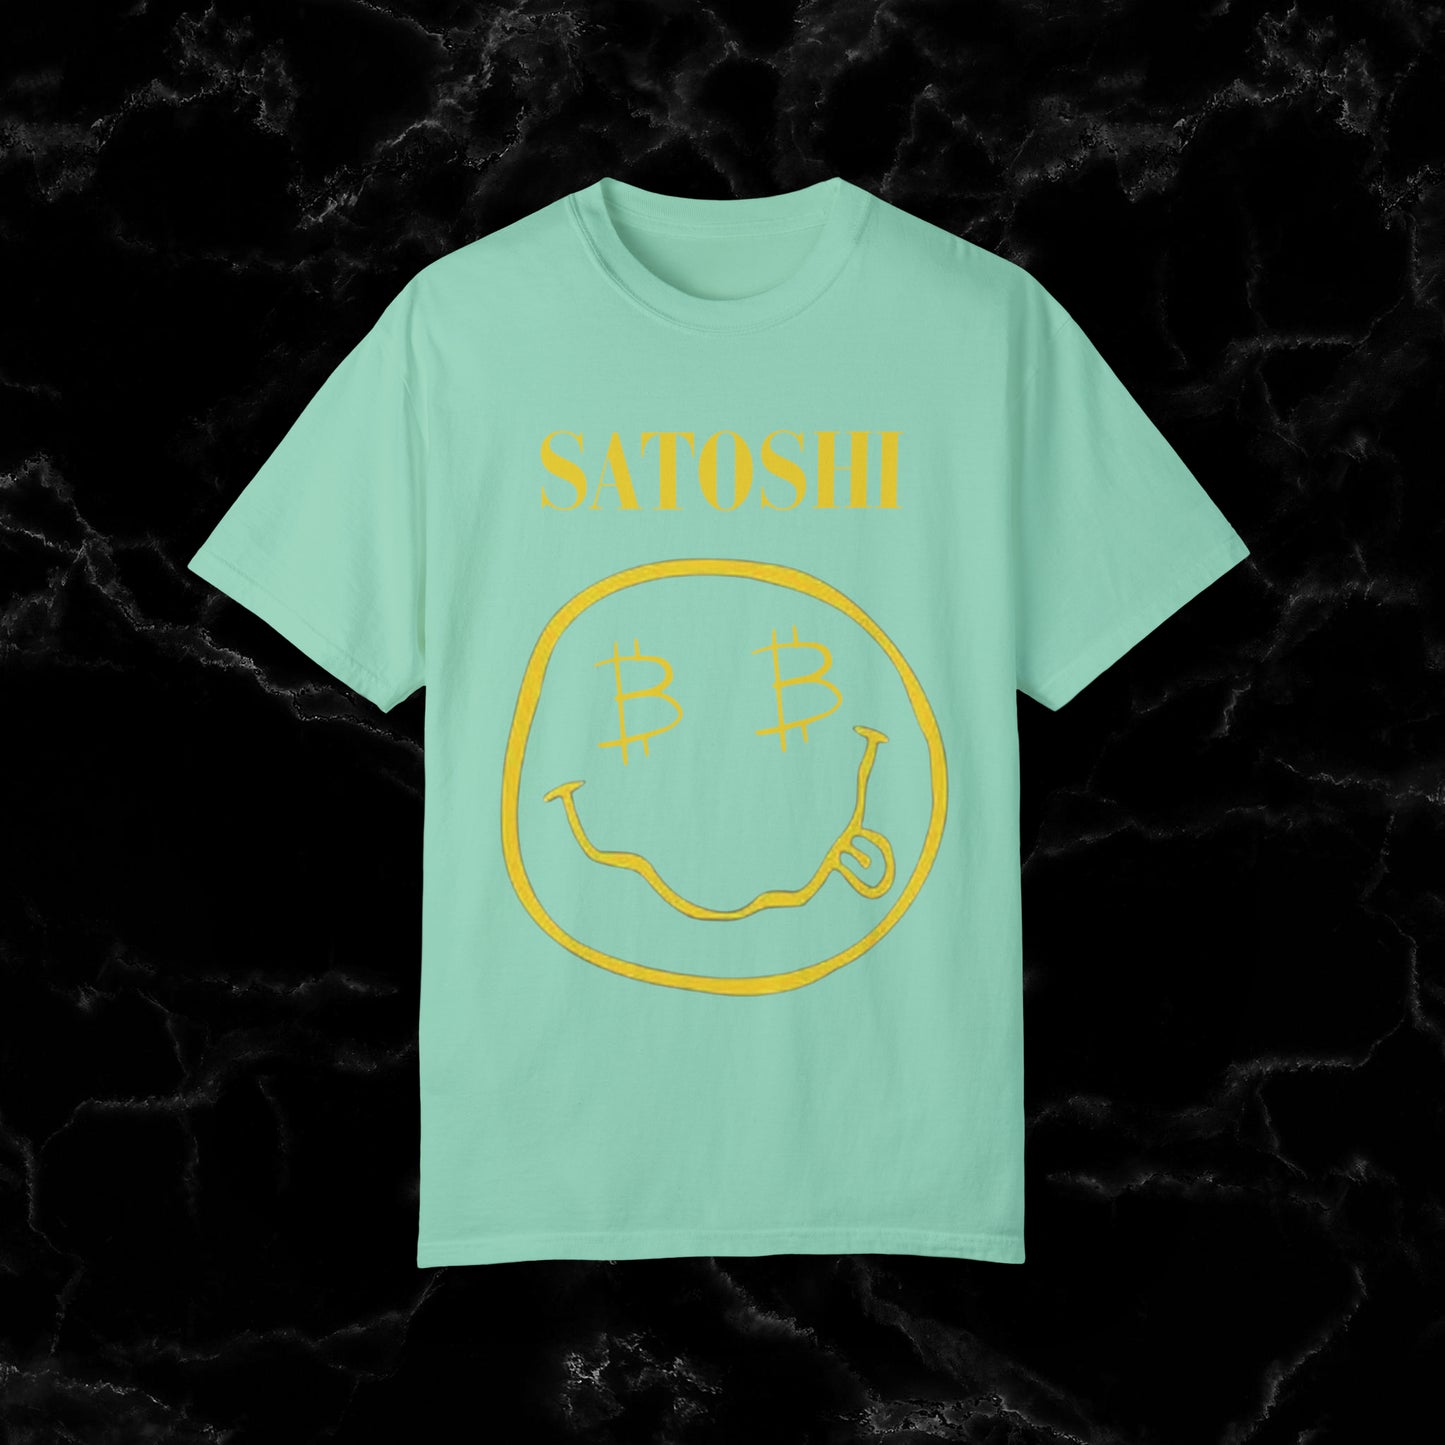 Nirvana Satoshi Shirt - Jack Dorsey's Super Bowl Style Statement T-Shirt   